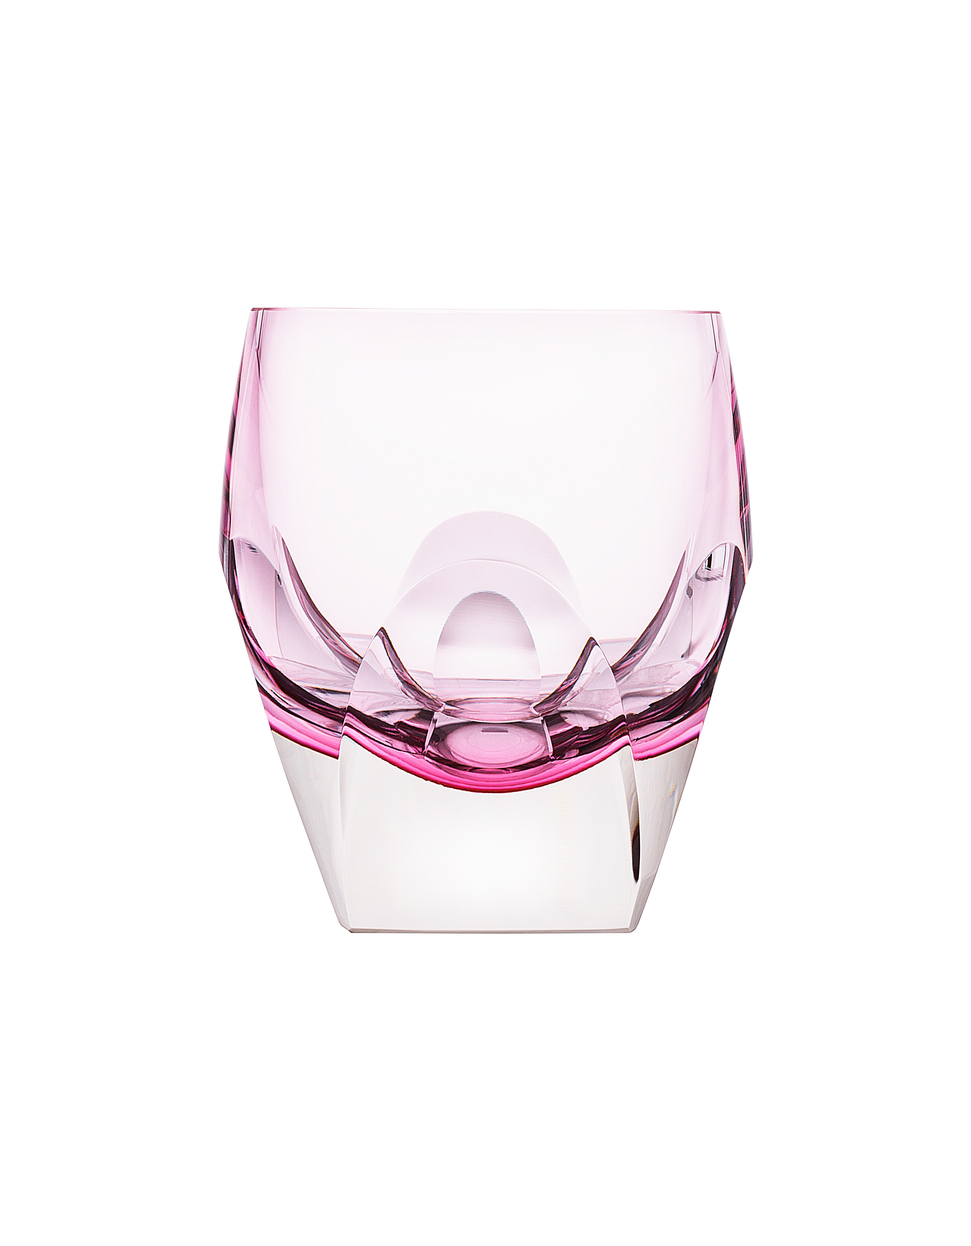 Bar spirit glass, 45 ml